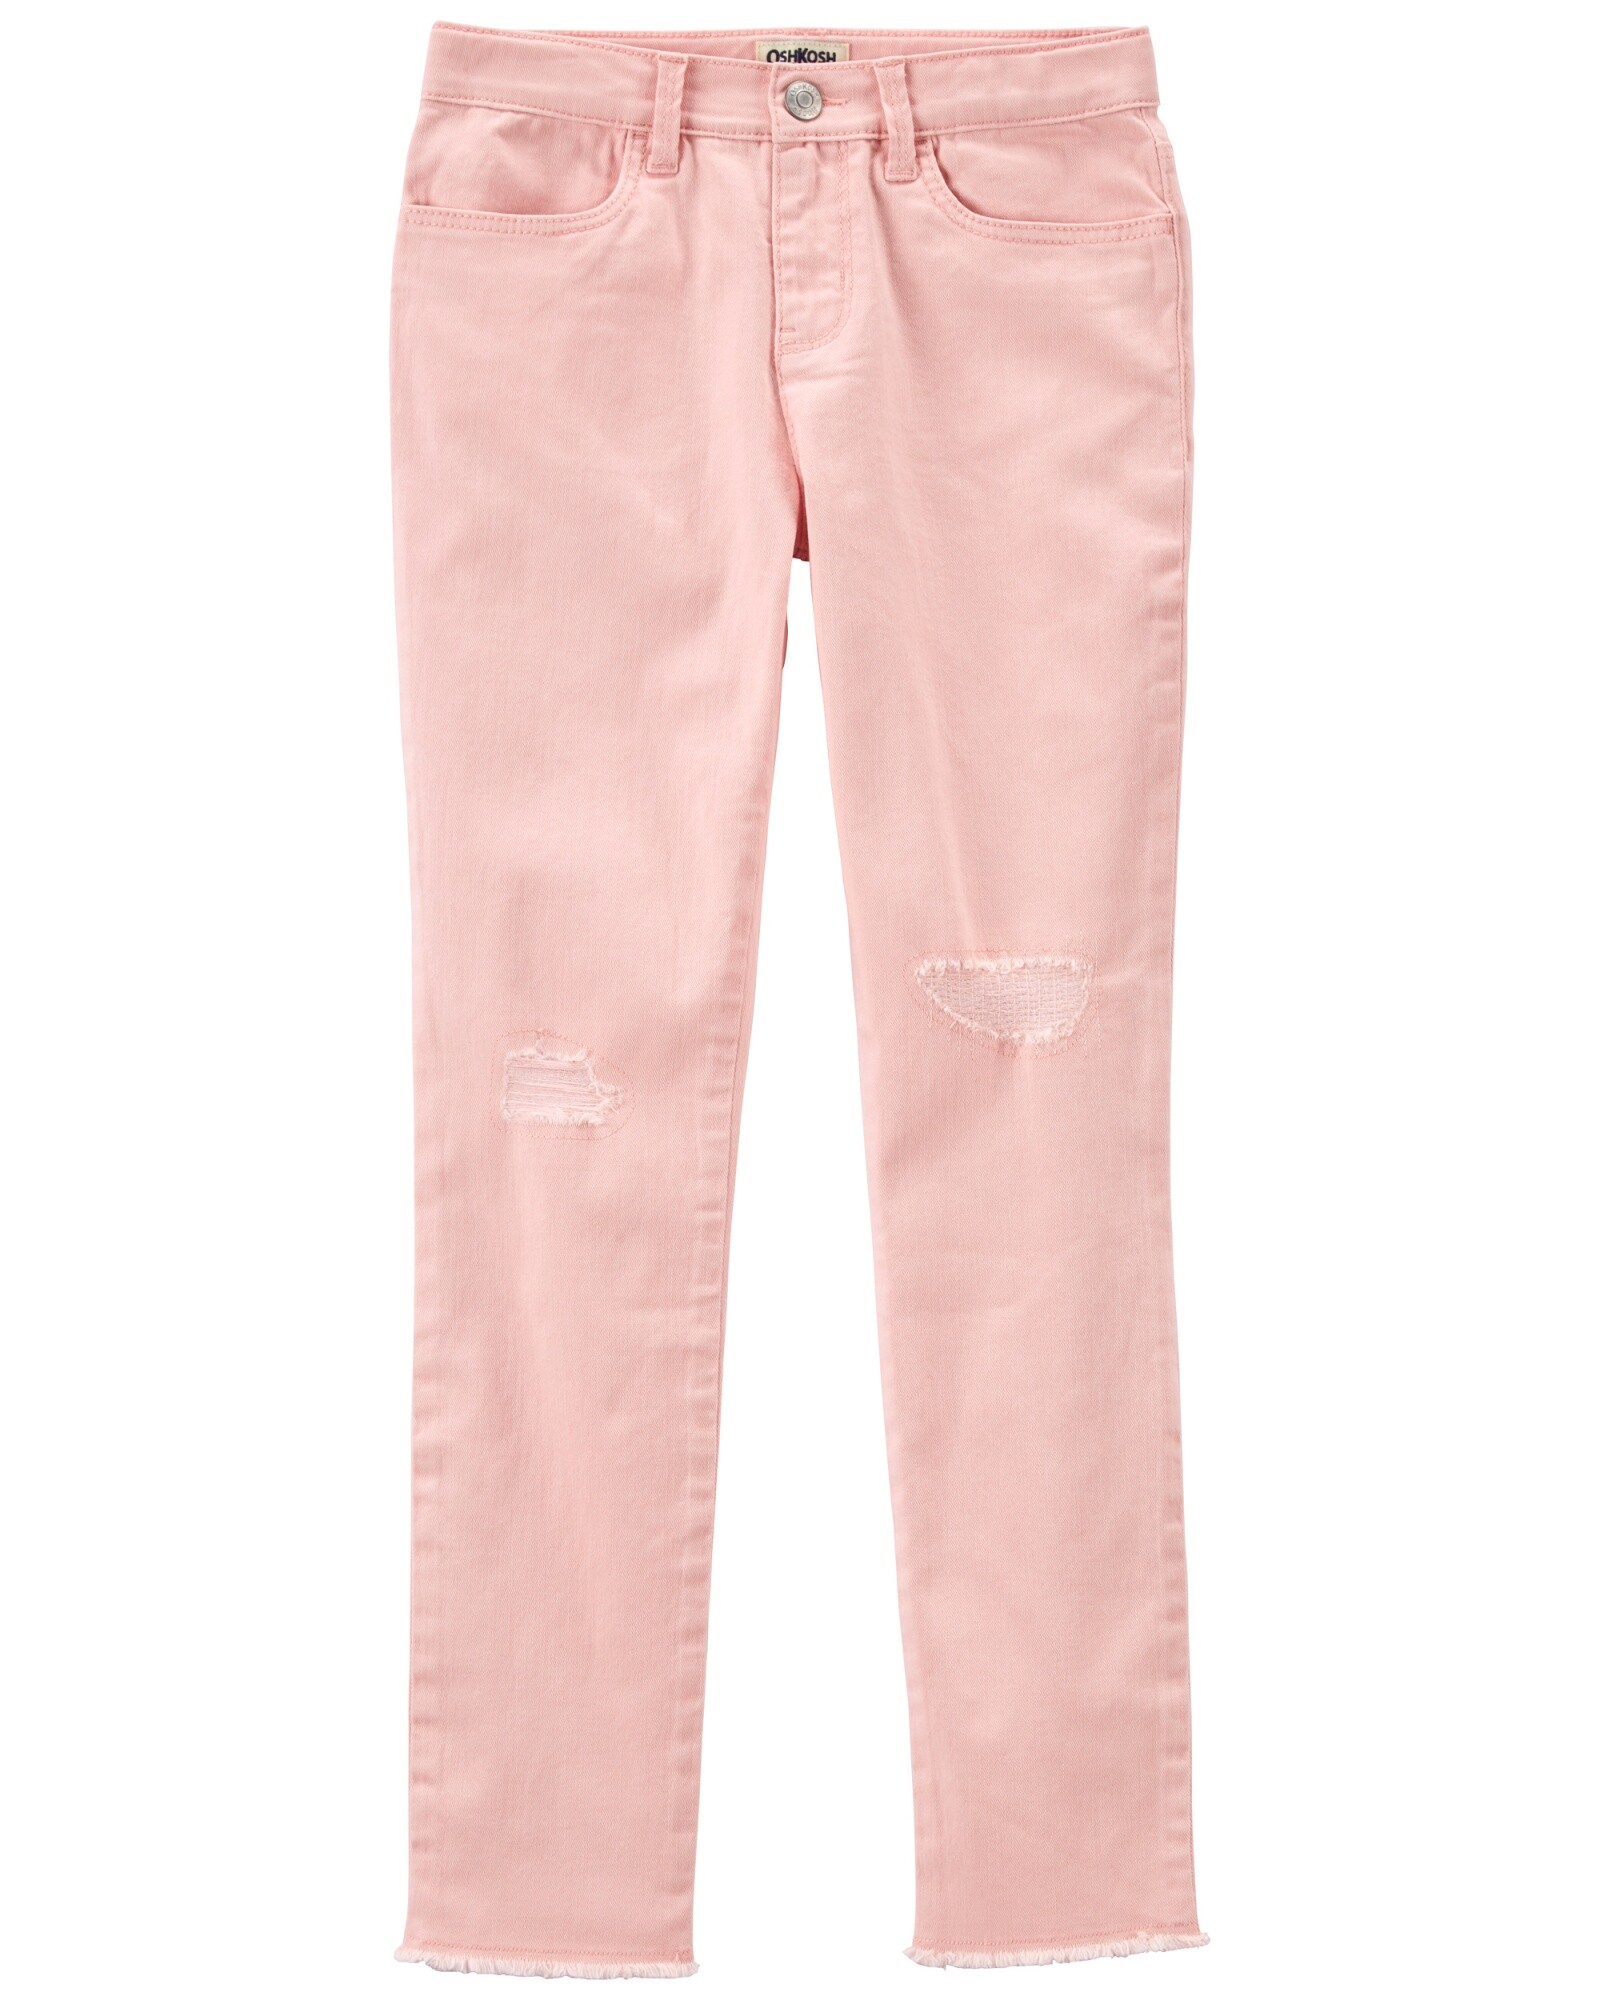 Pantalón de jean ajustado con detalles rasgados. Talles 6-8 Sin color